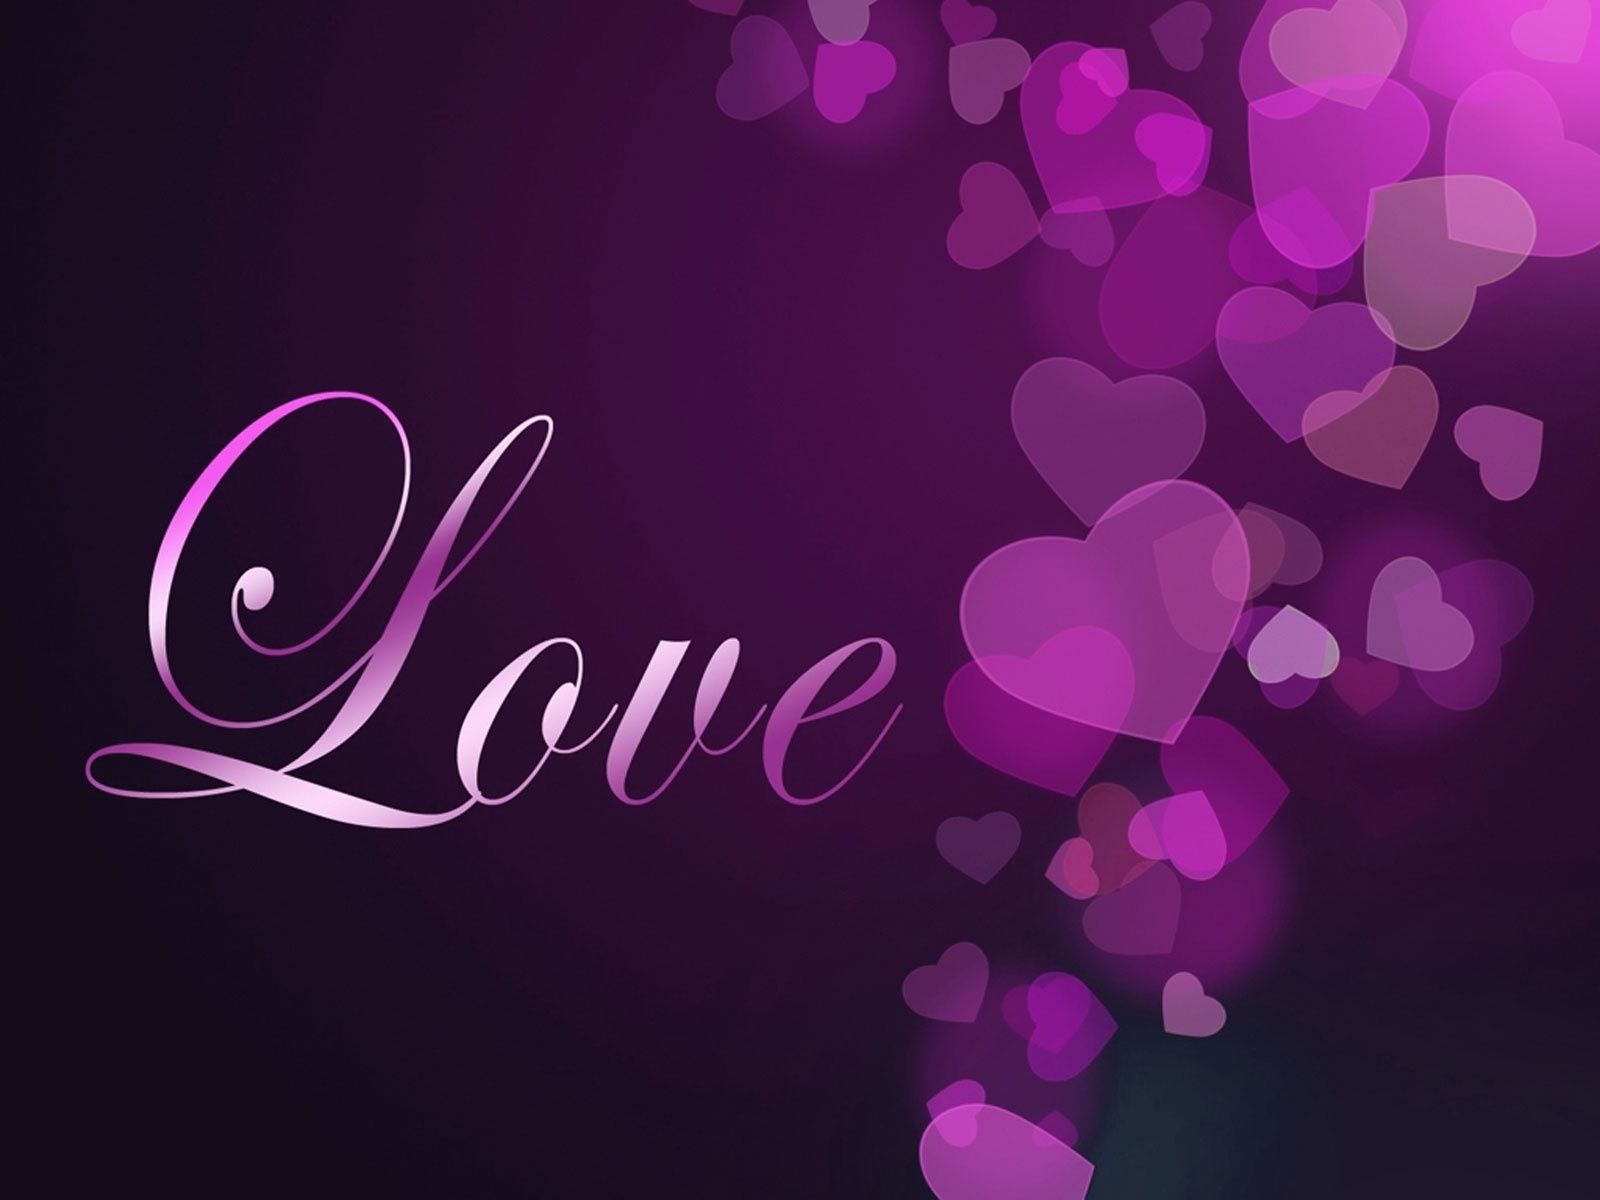 all love wallpaper,texto,púrpura,violeta,fuente,rosado